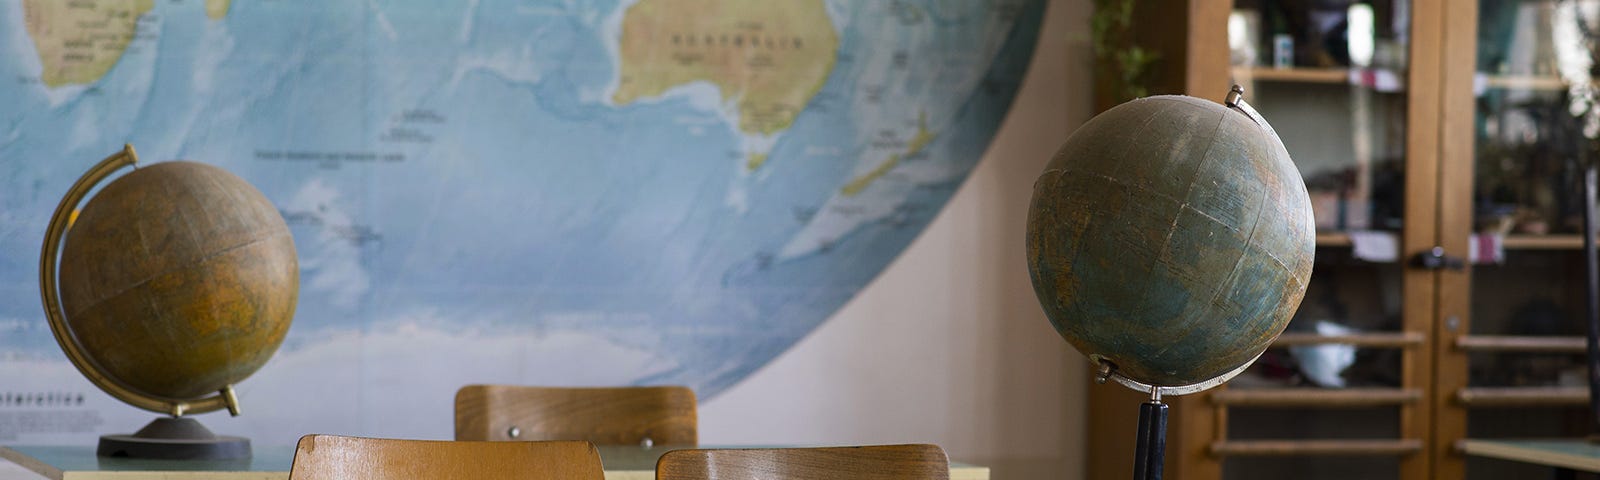 Globes in a school classroom